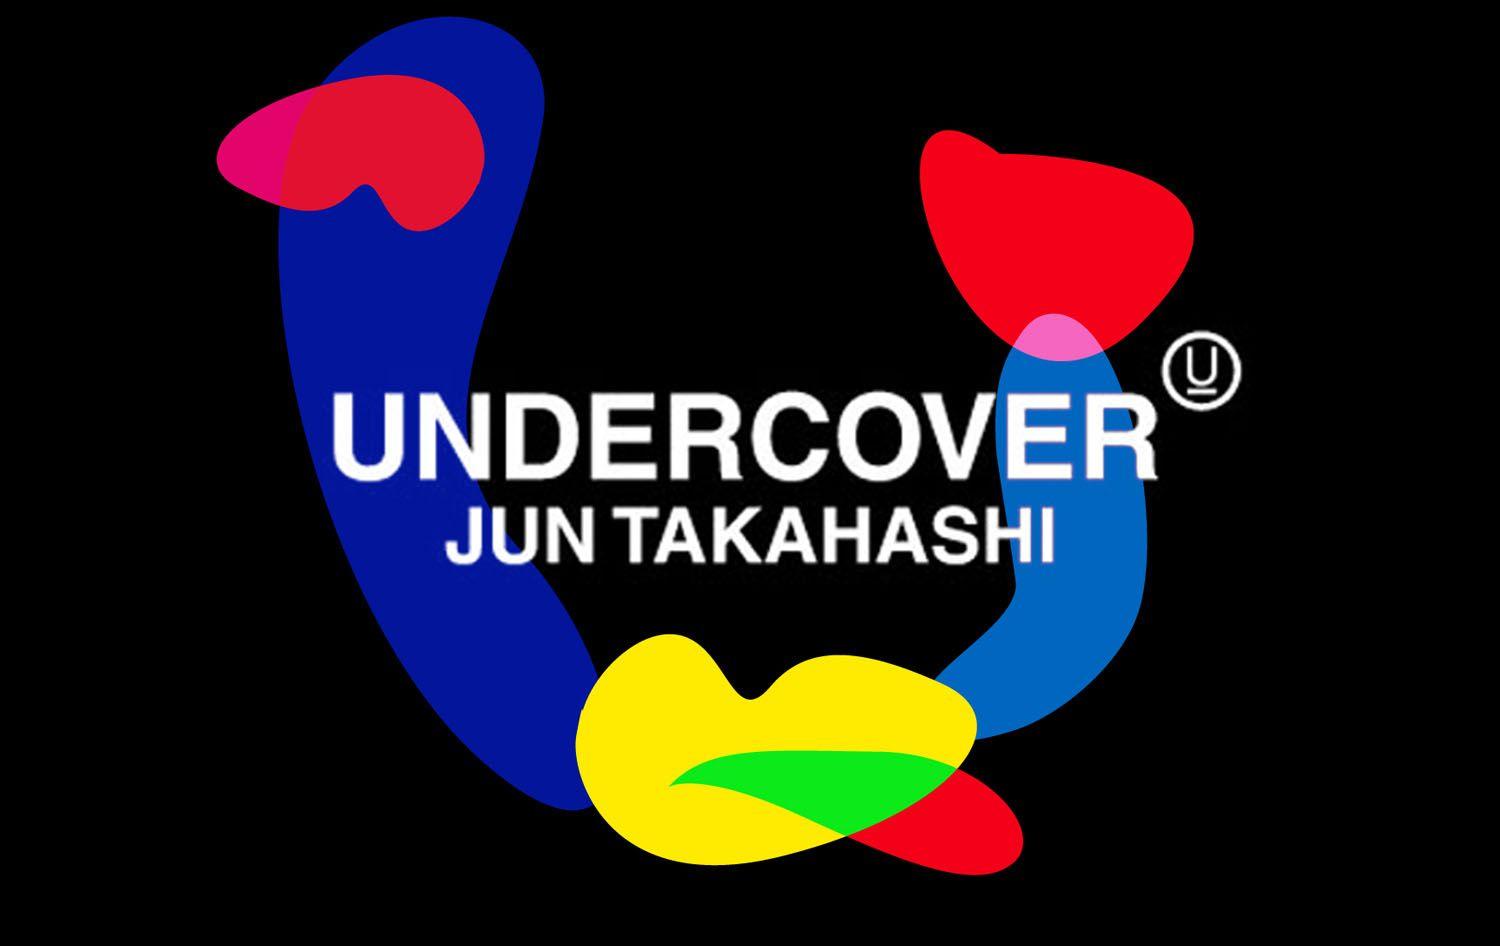 Jun Takahashi Undercover Logo - UNDERCOVER Jun Takahashi（アンダーカバー） - Wakapedia